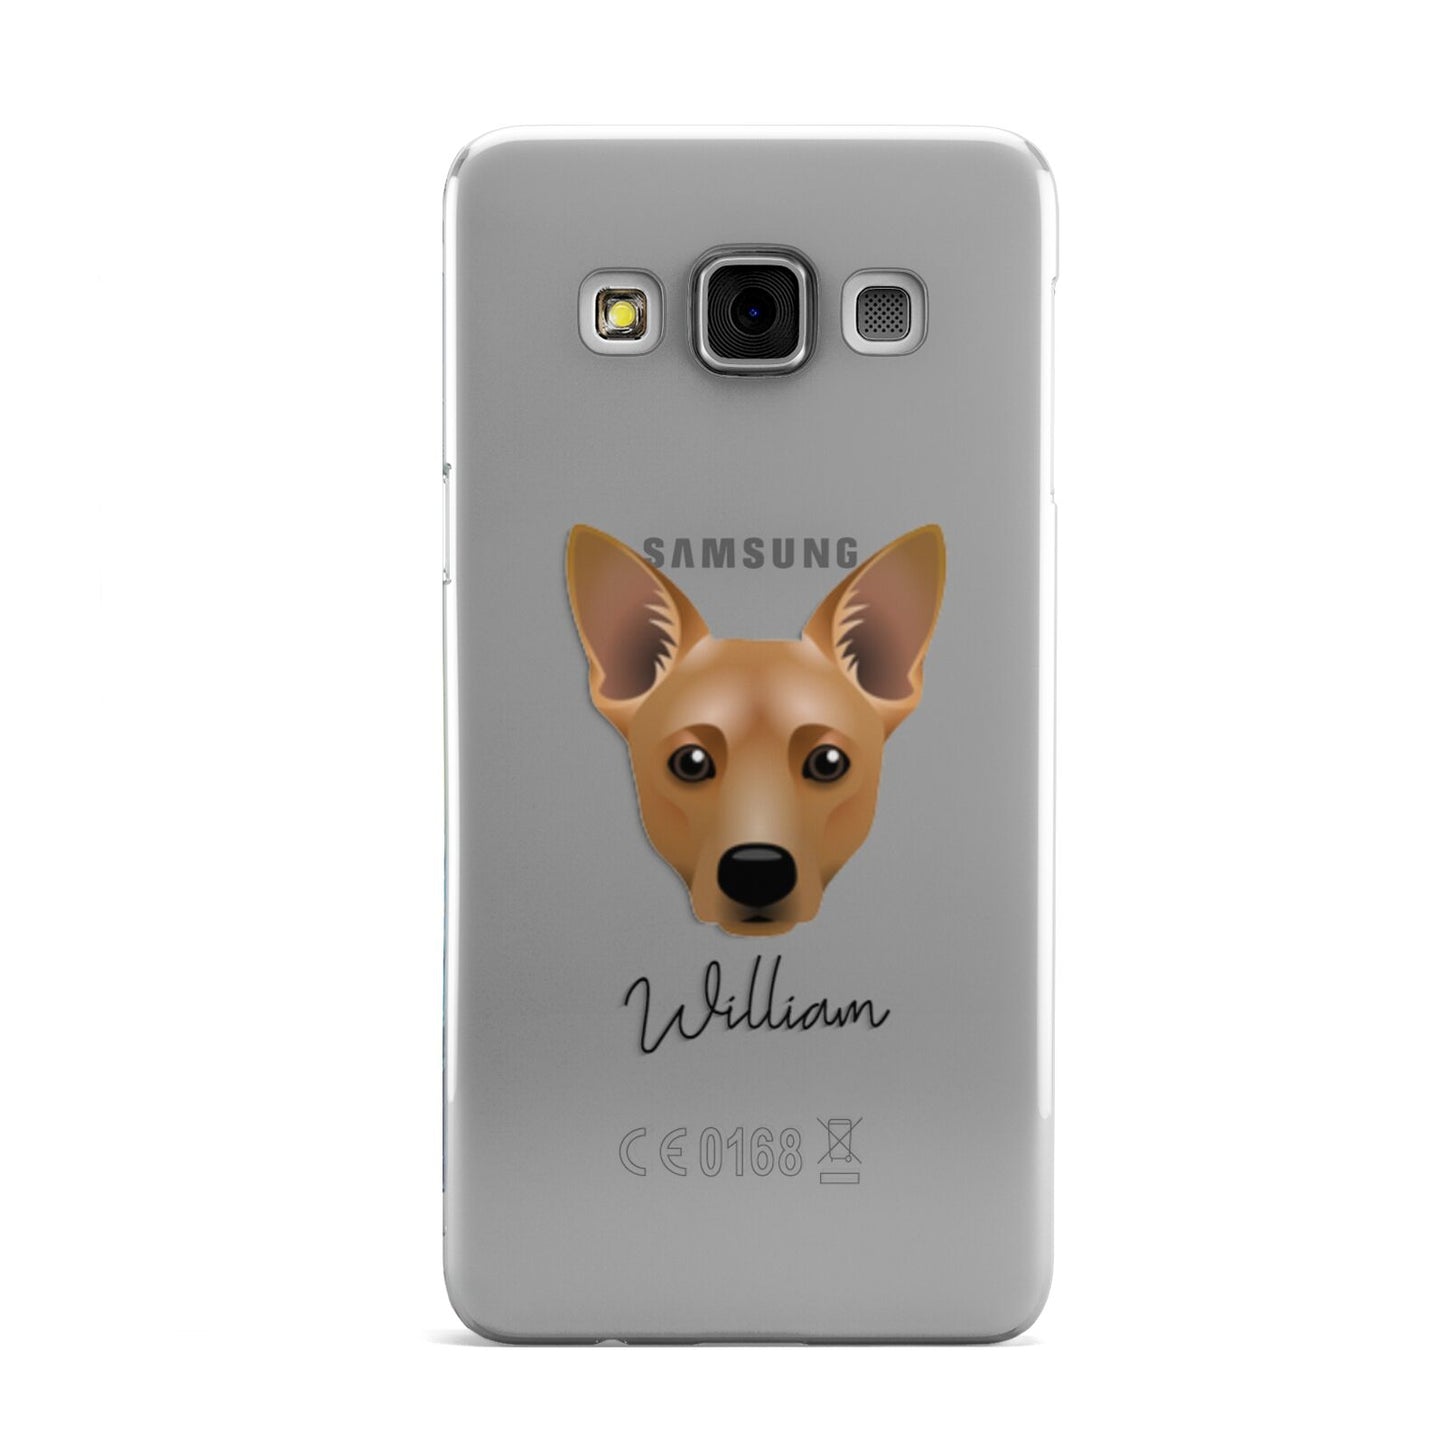 Cojack Personalised Samsung Galaxy A3 Case